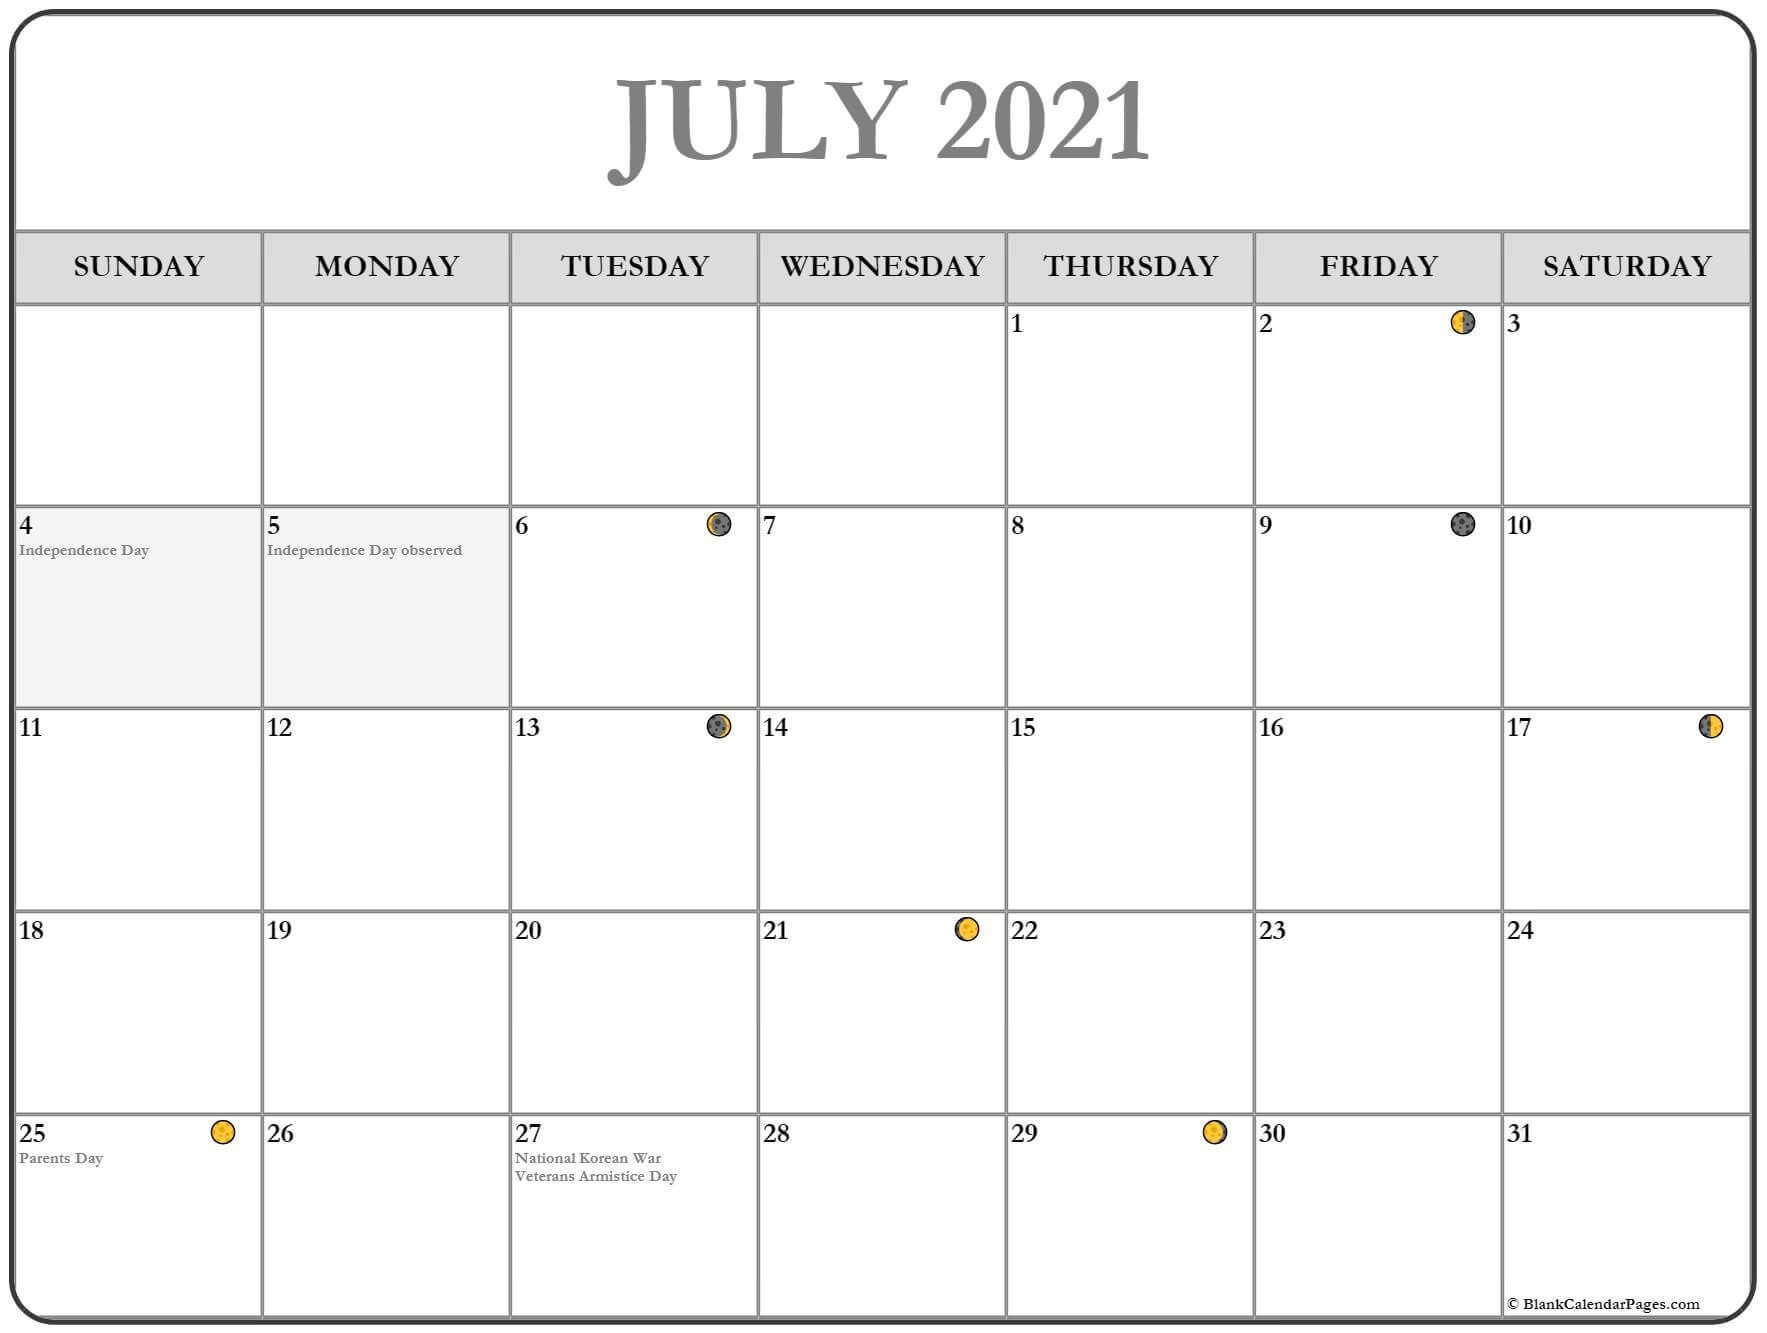 July 2021 Moon Phases Calendar